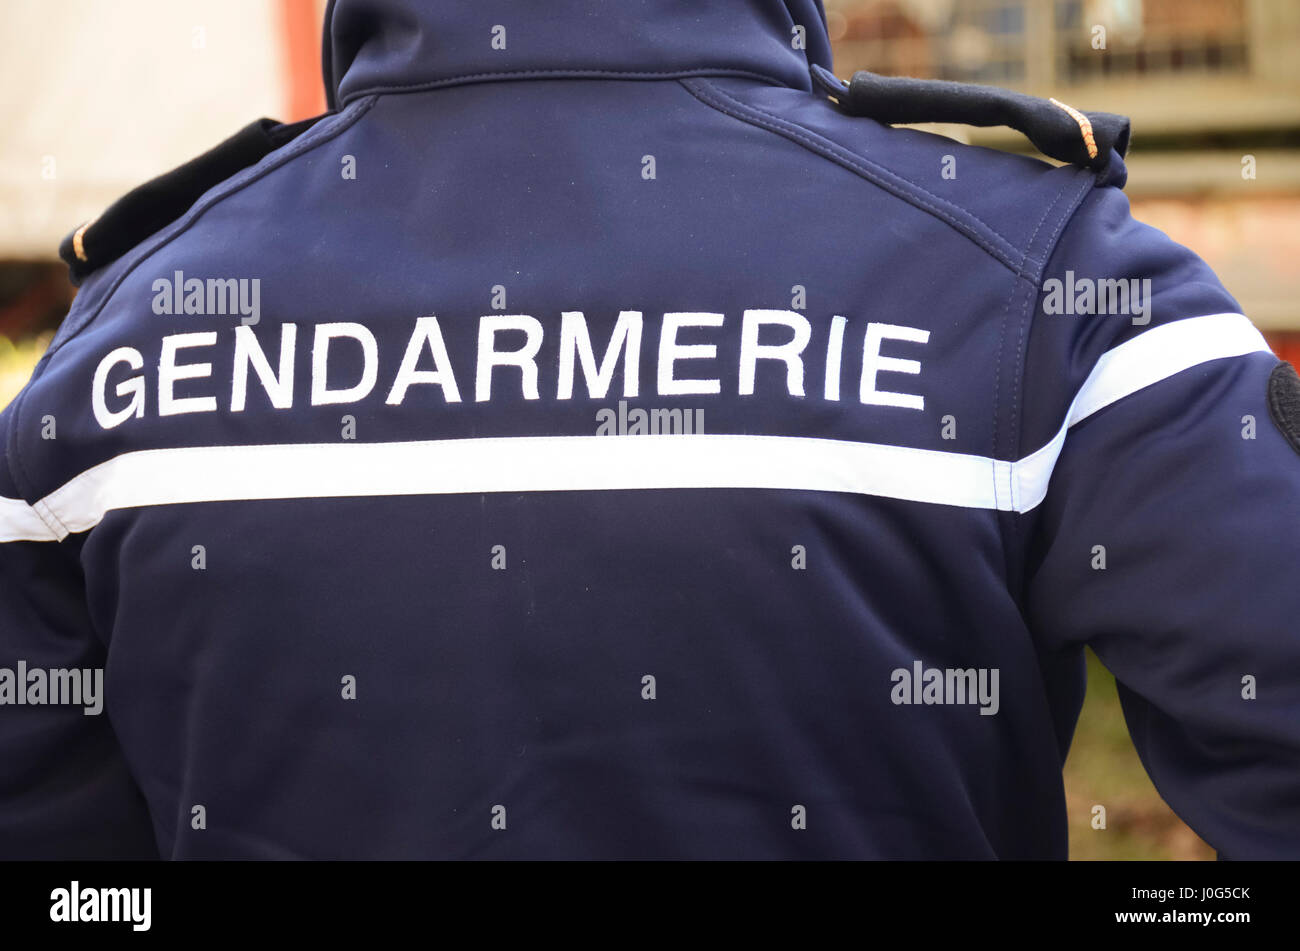 gendarme, french policeman uniform Stock Photo